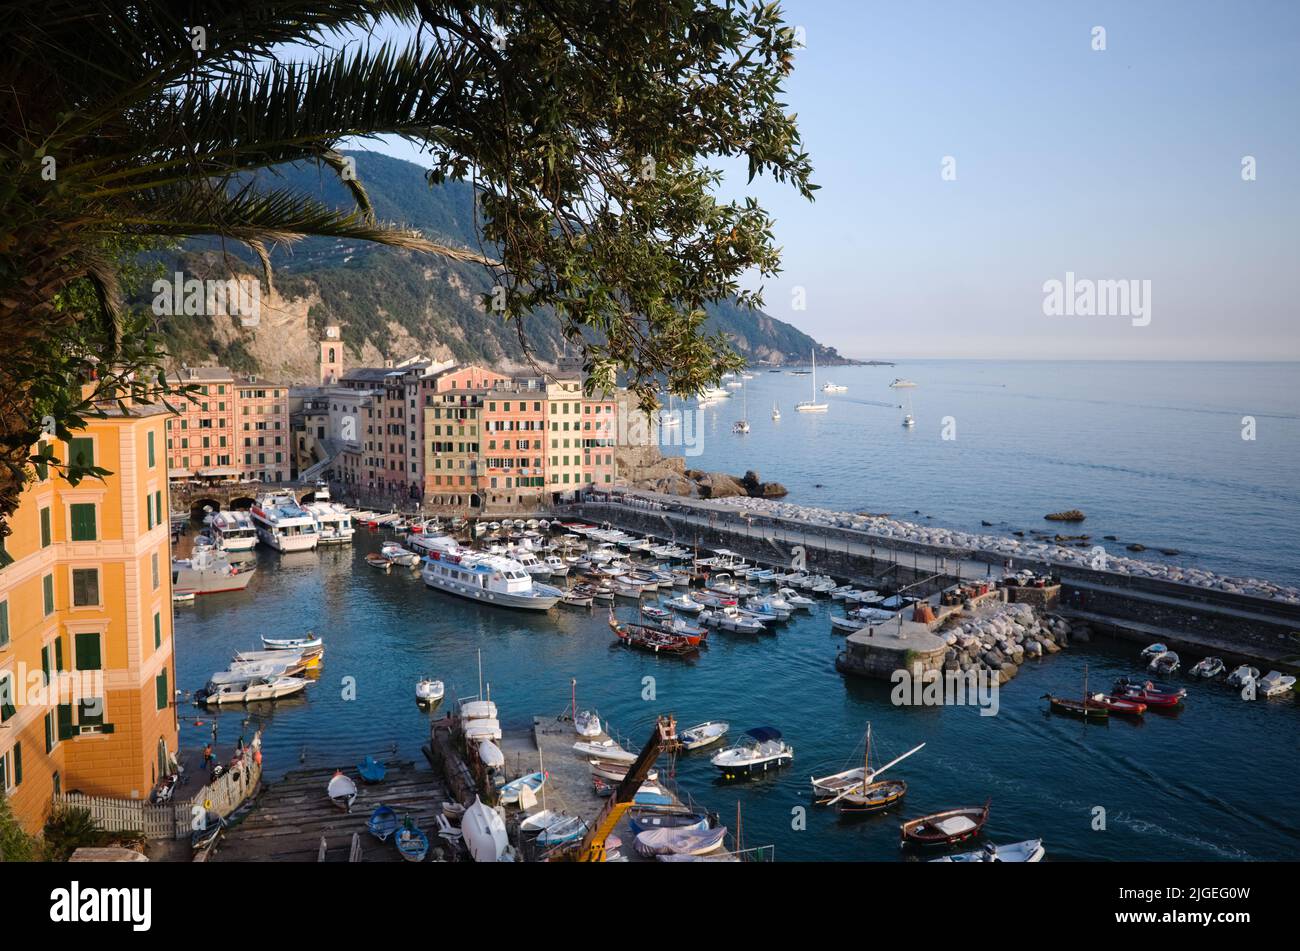 Marina with boats, yachts and ferries called Porticciolo di Camogli, Liguria, Italy. Harbor of Italian village on Mediterranean coast Stock Photo